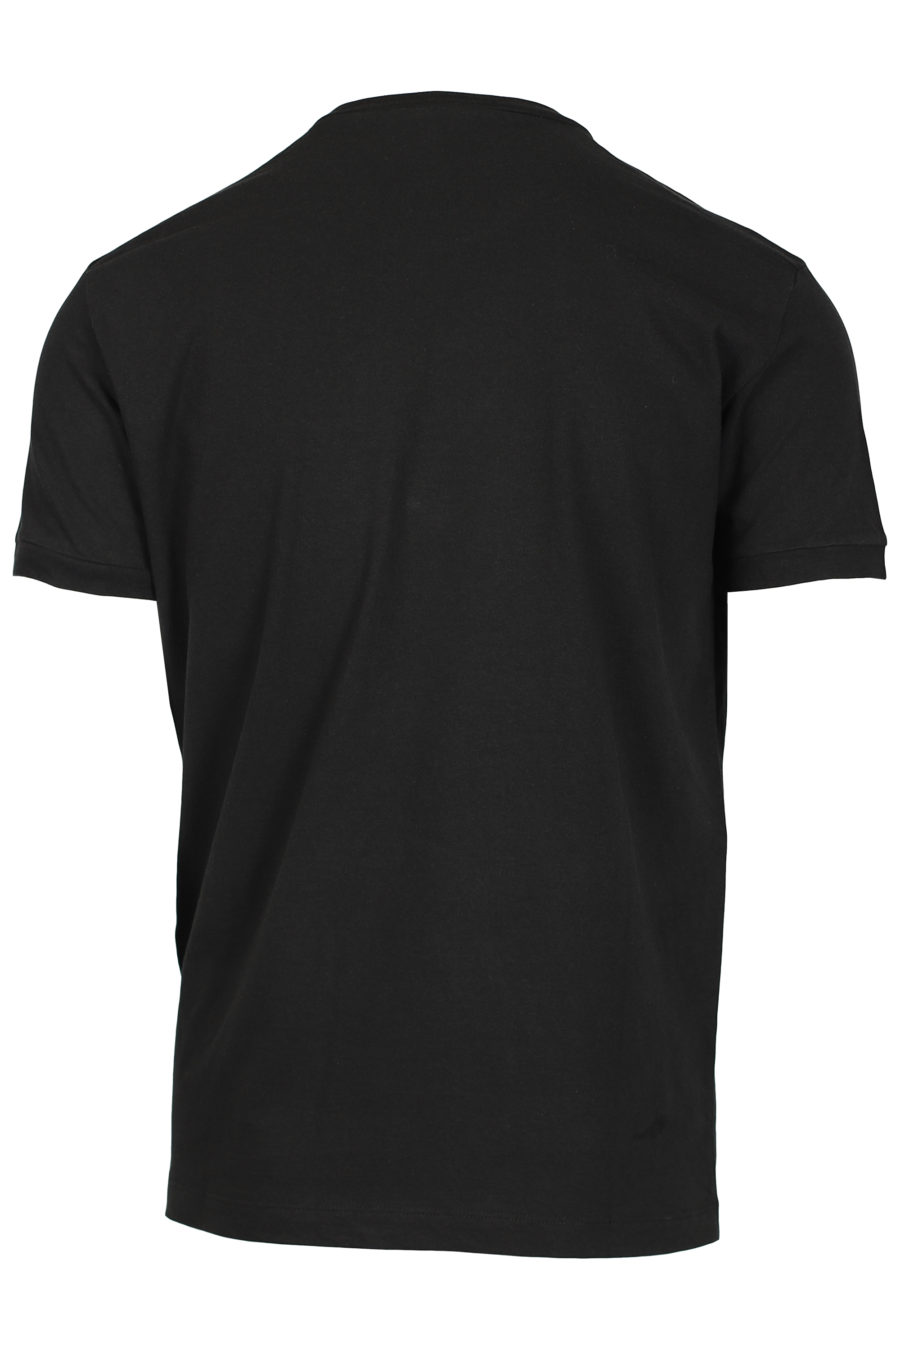 Camiseta negra con estampado pequeño - IMG 2555